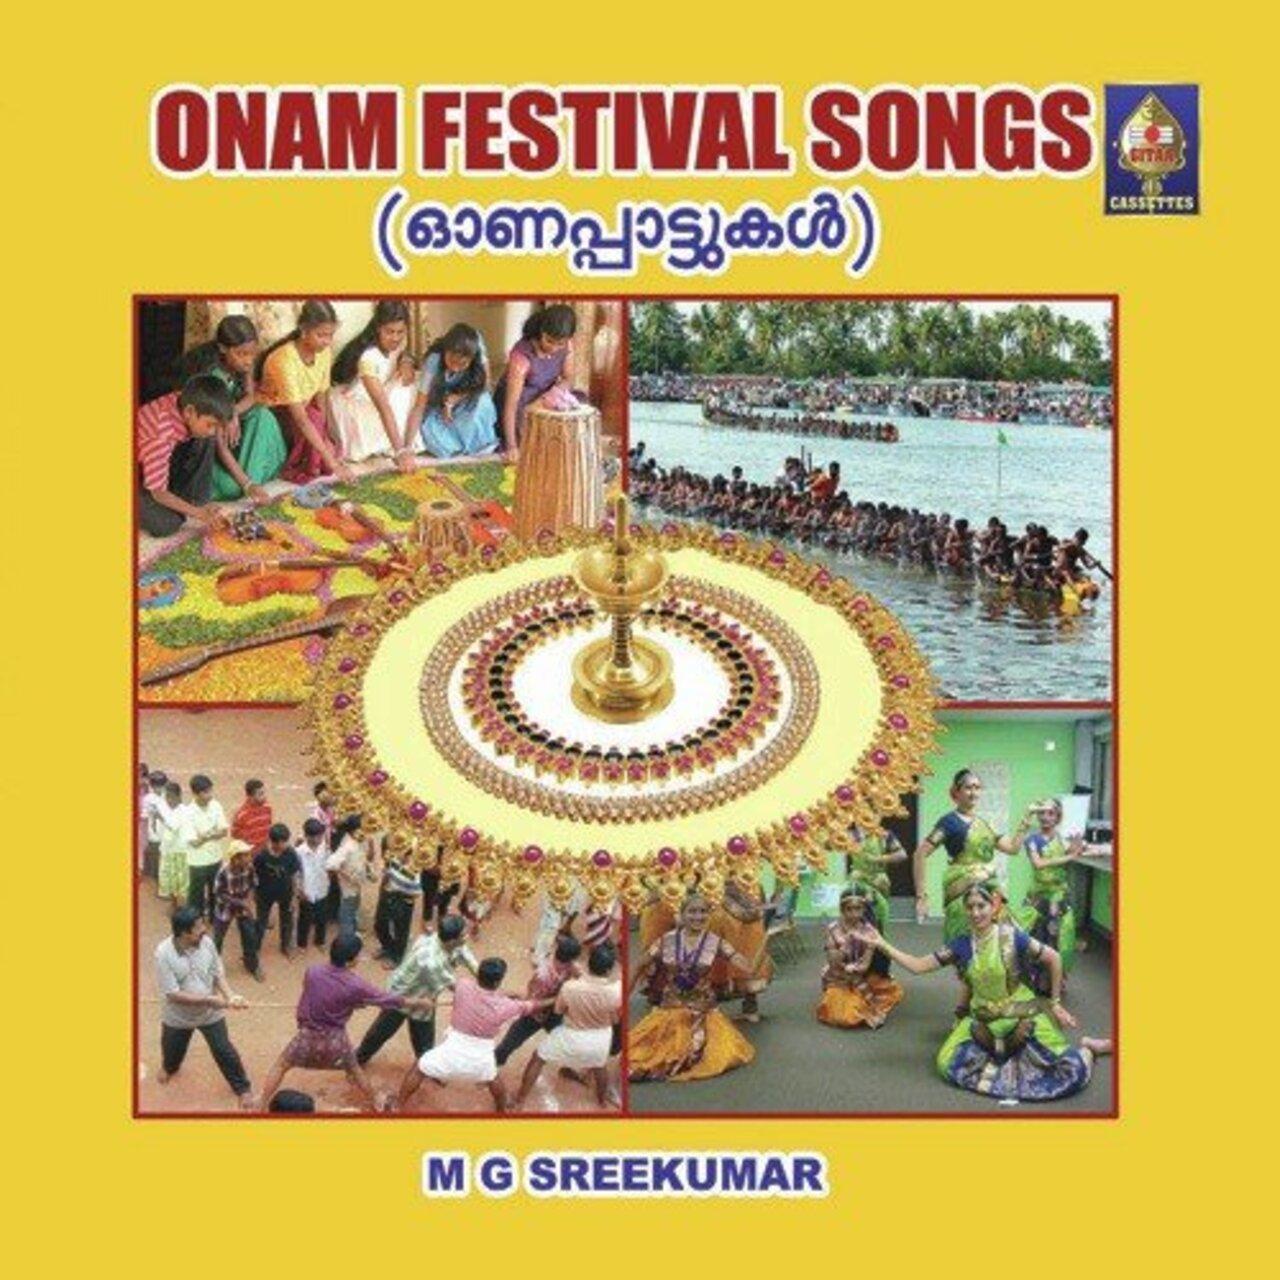 Joyful rhythms and colorful celebrations, 'Onam Vannu' brings Kerala's festive spirit to life